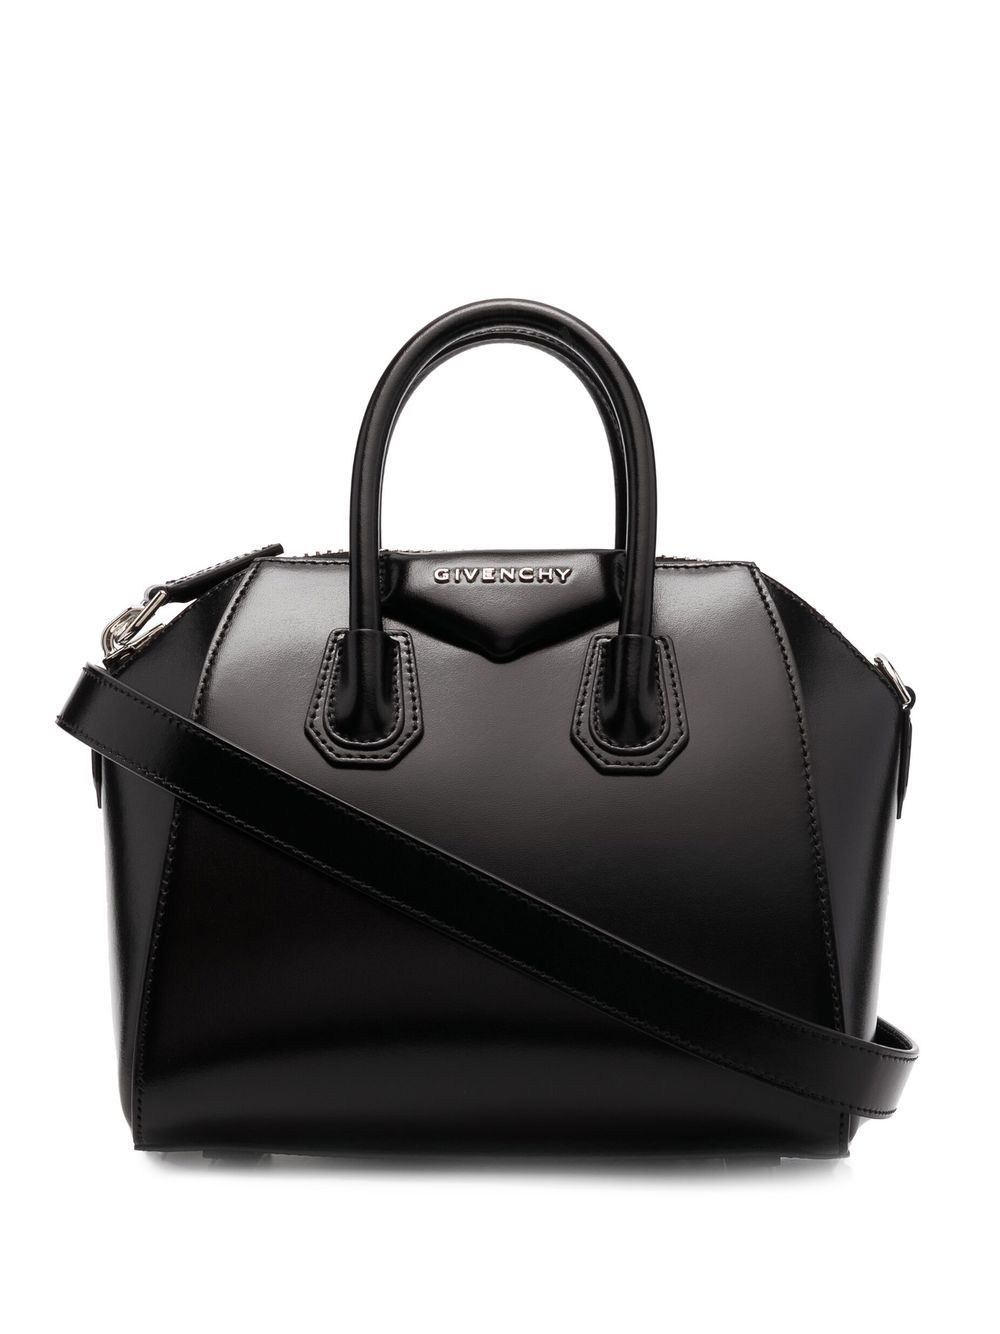 Givenchy Antigona Small Leather Tote Bag